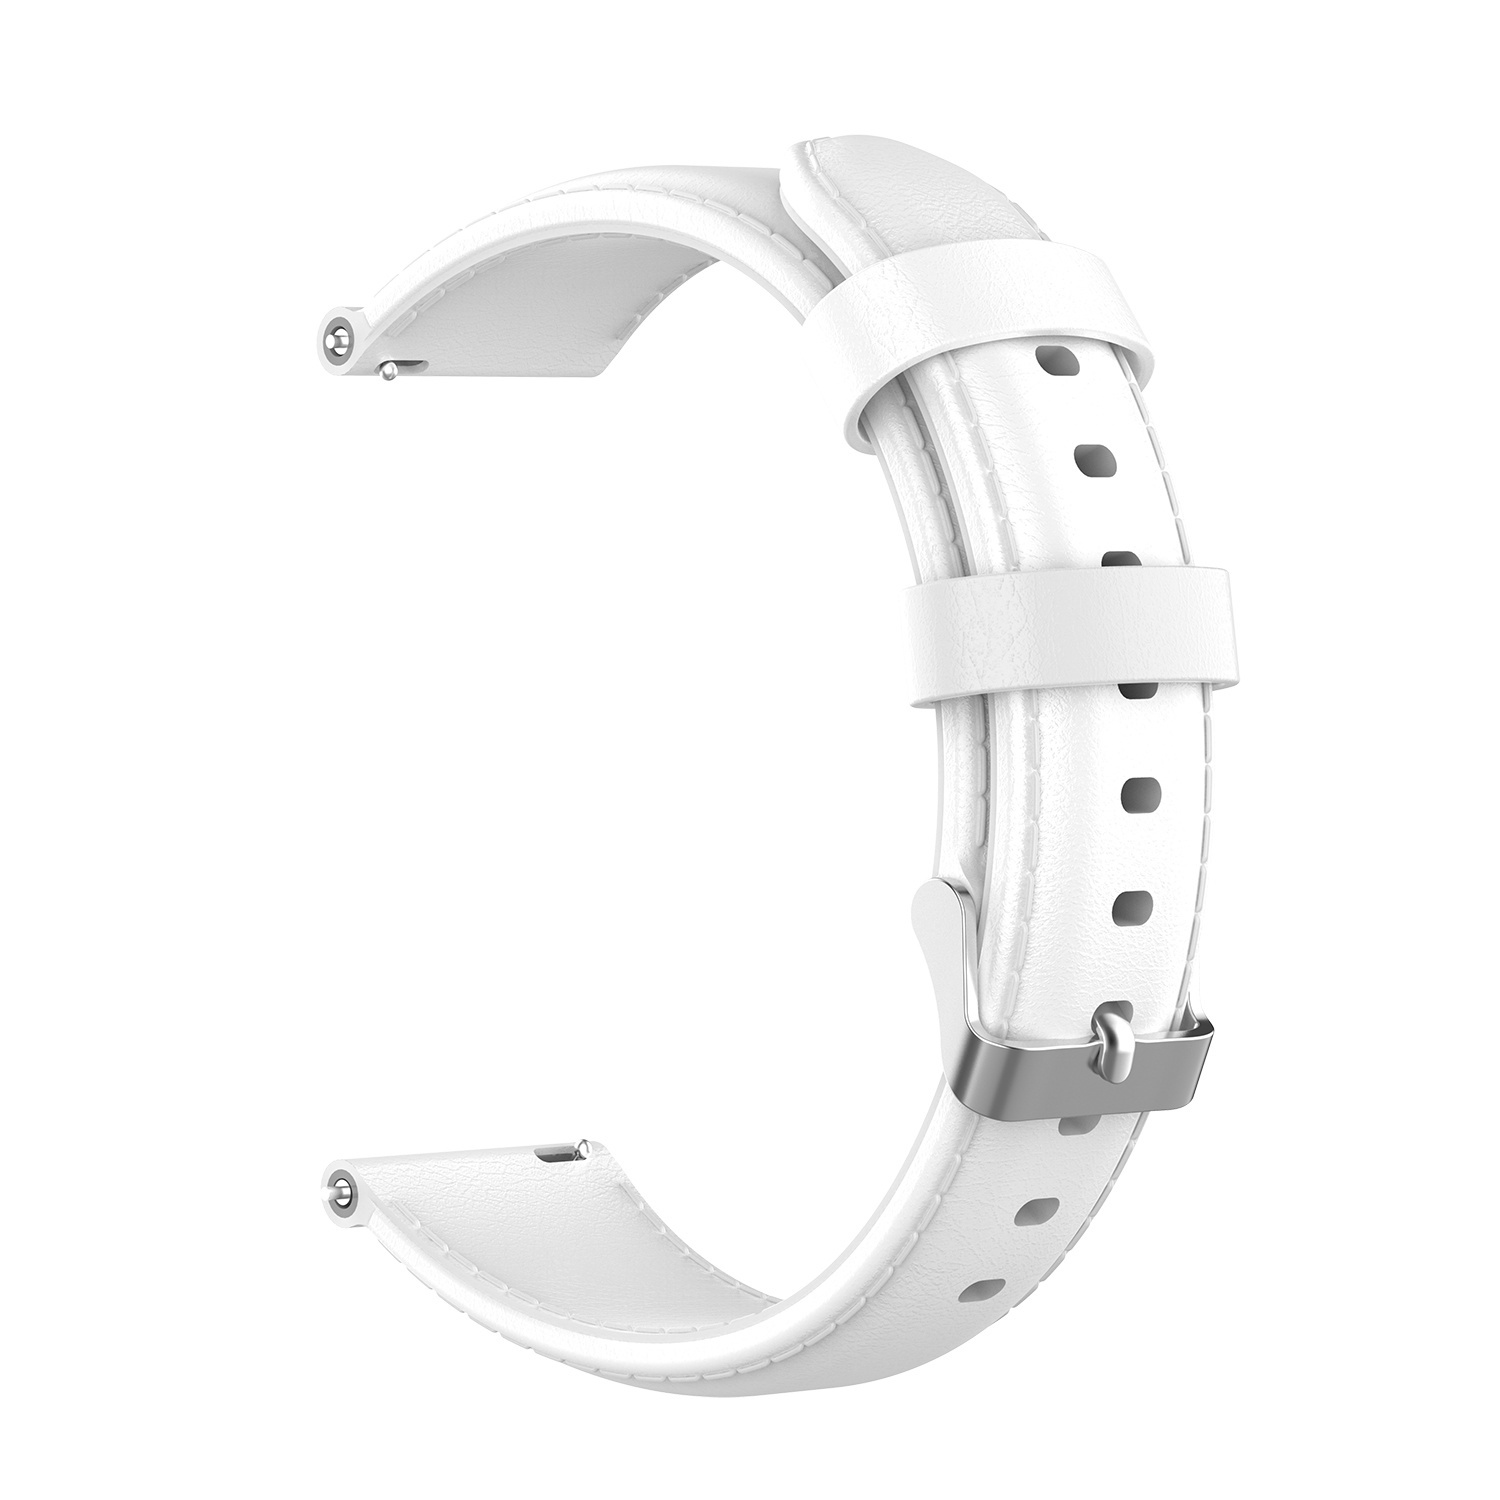 Samsung Galaxy Watch Leather Strap - White